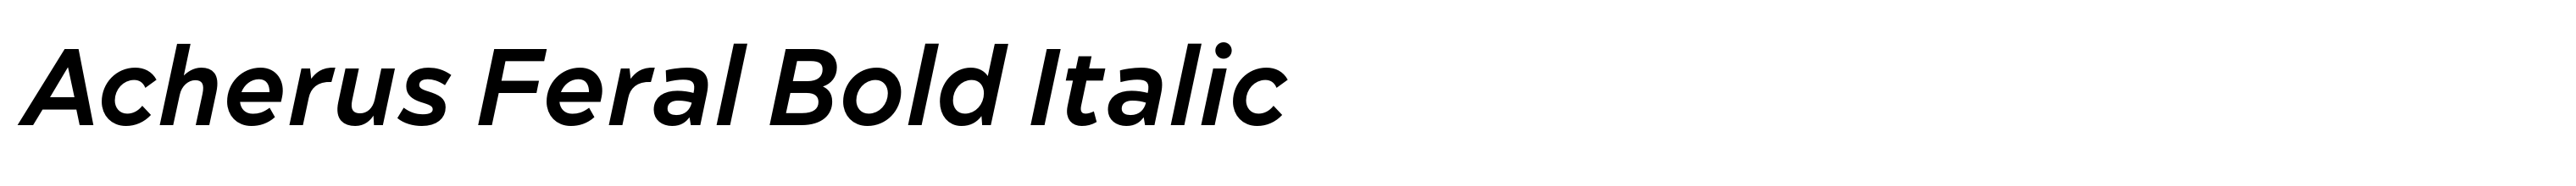 Acherus Feral Bold Italic